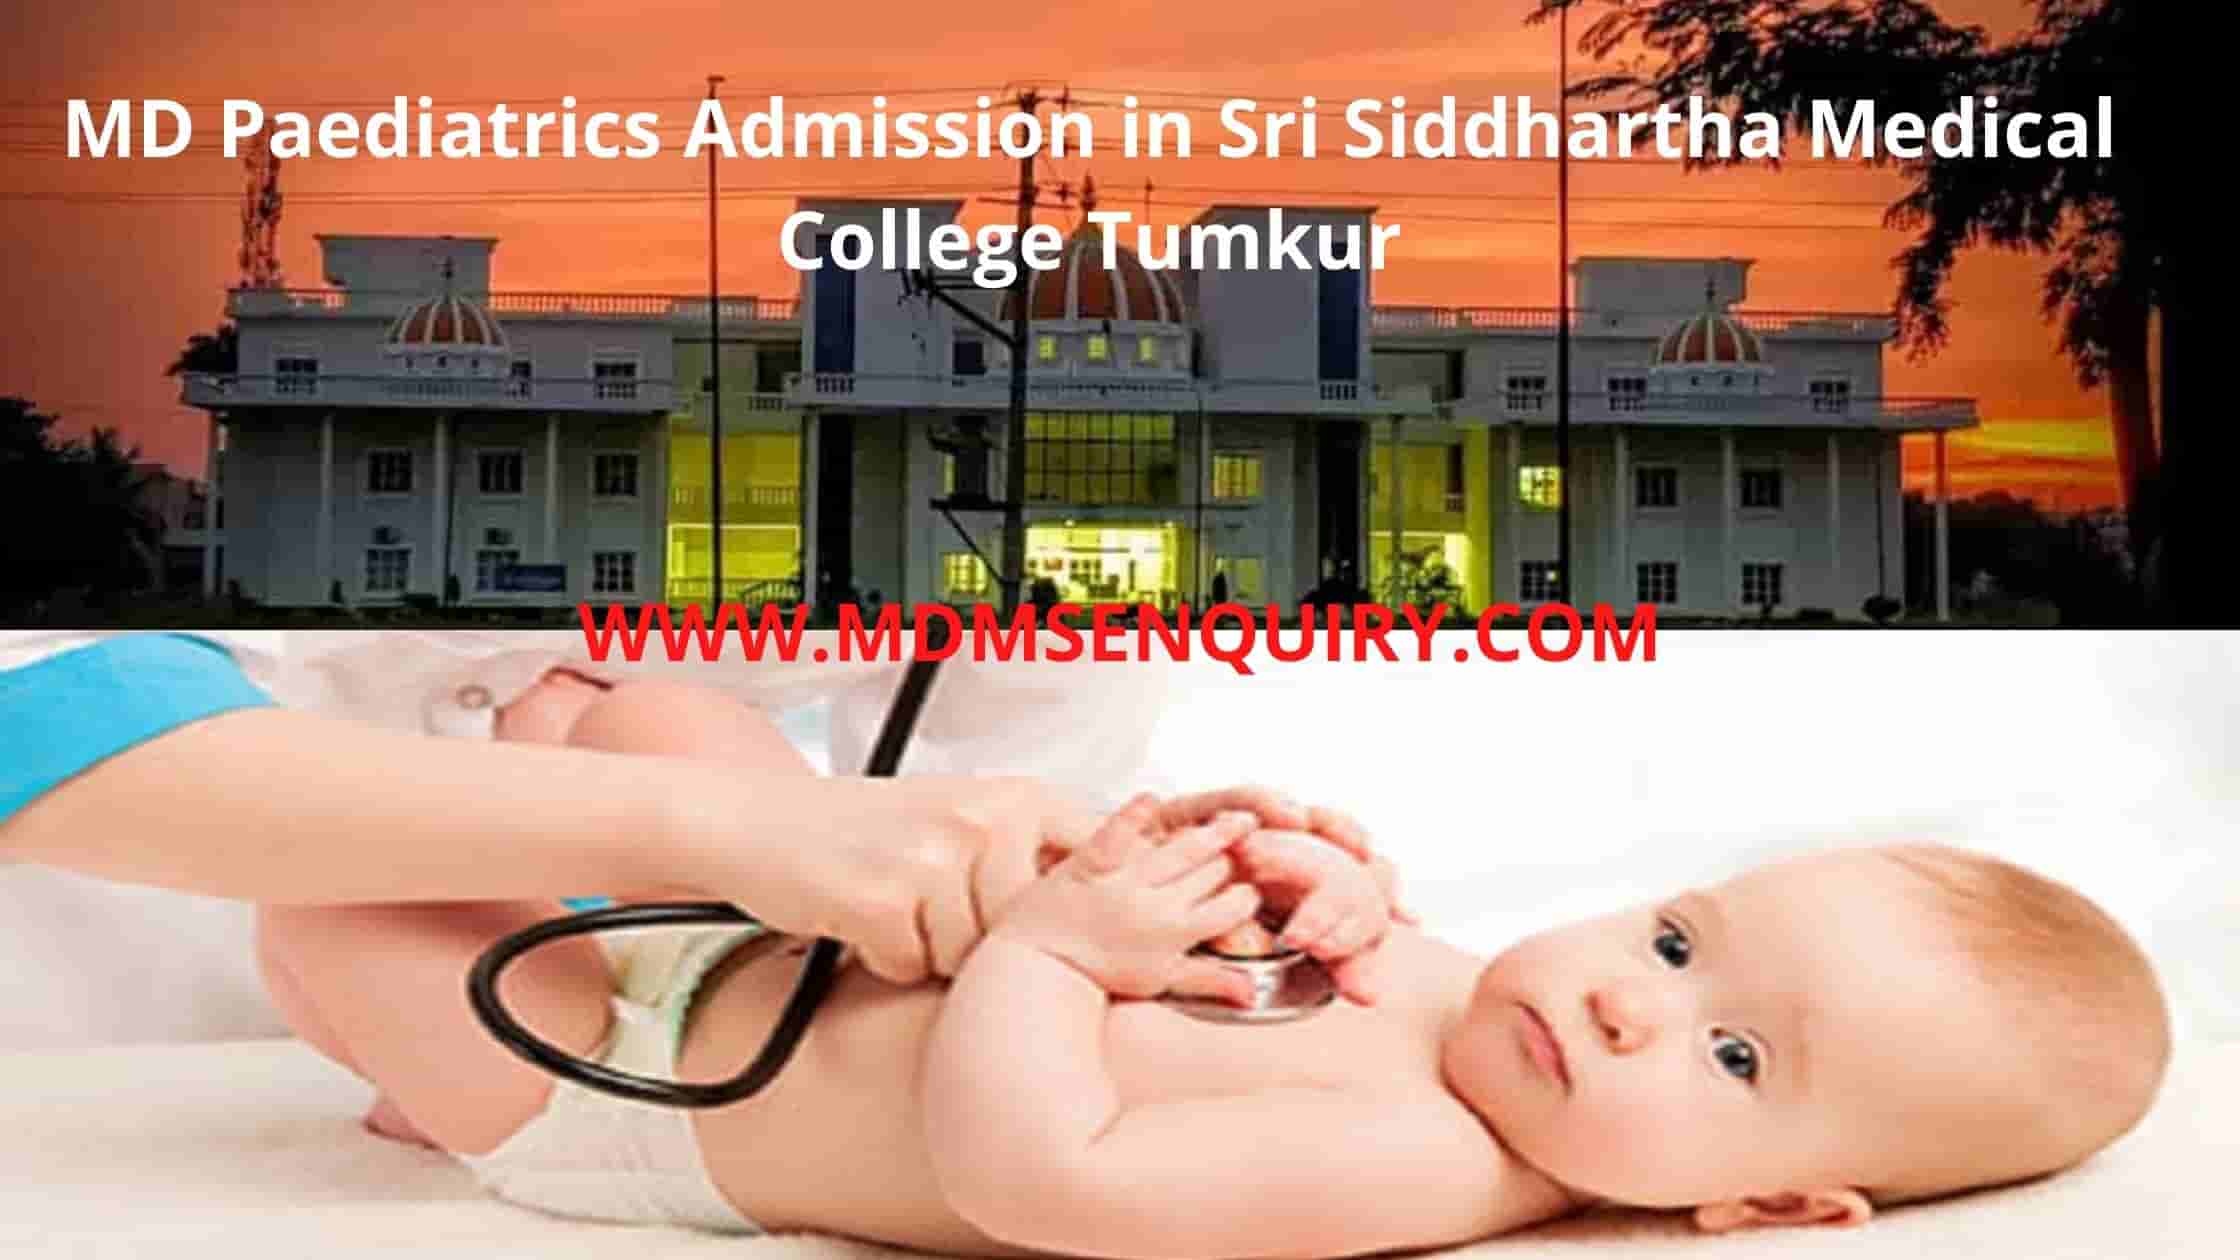 MD Paediatrics Admission in Sri Siddhartha Medical College Tumkur